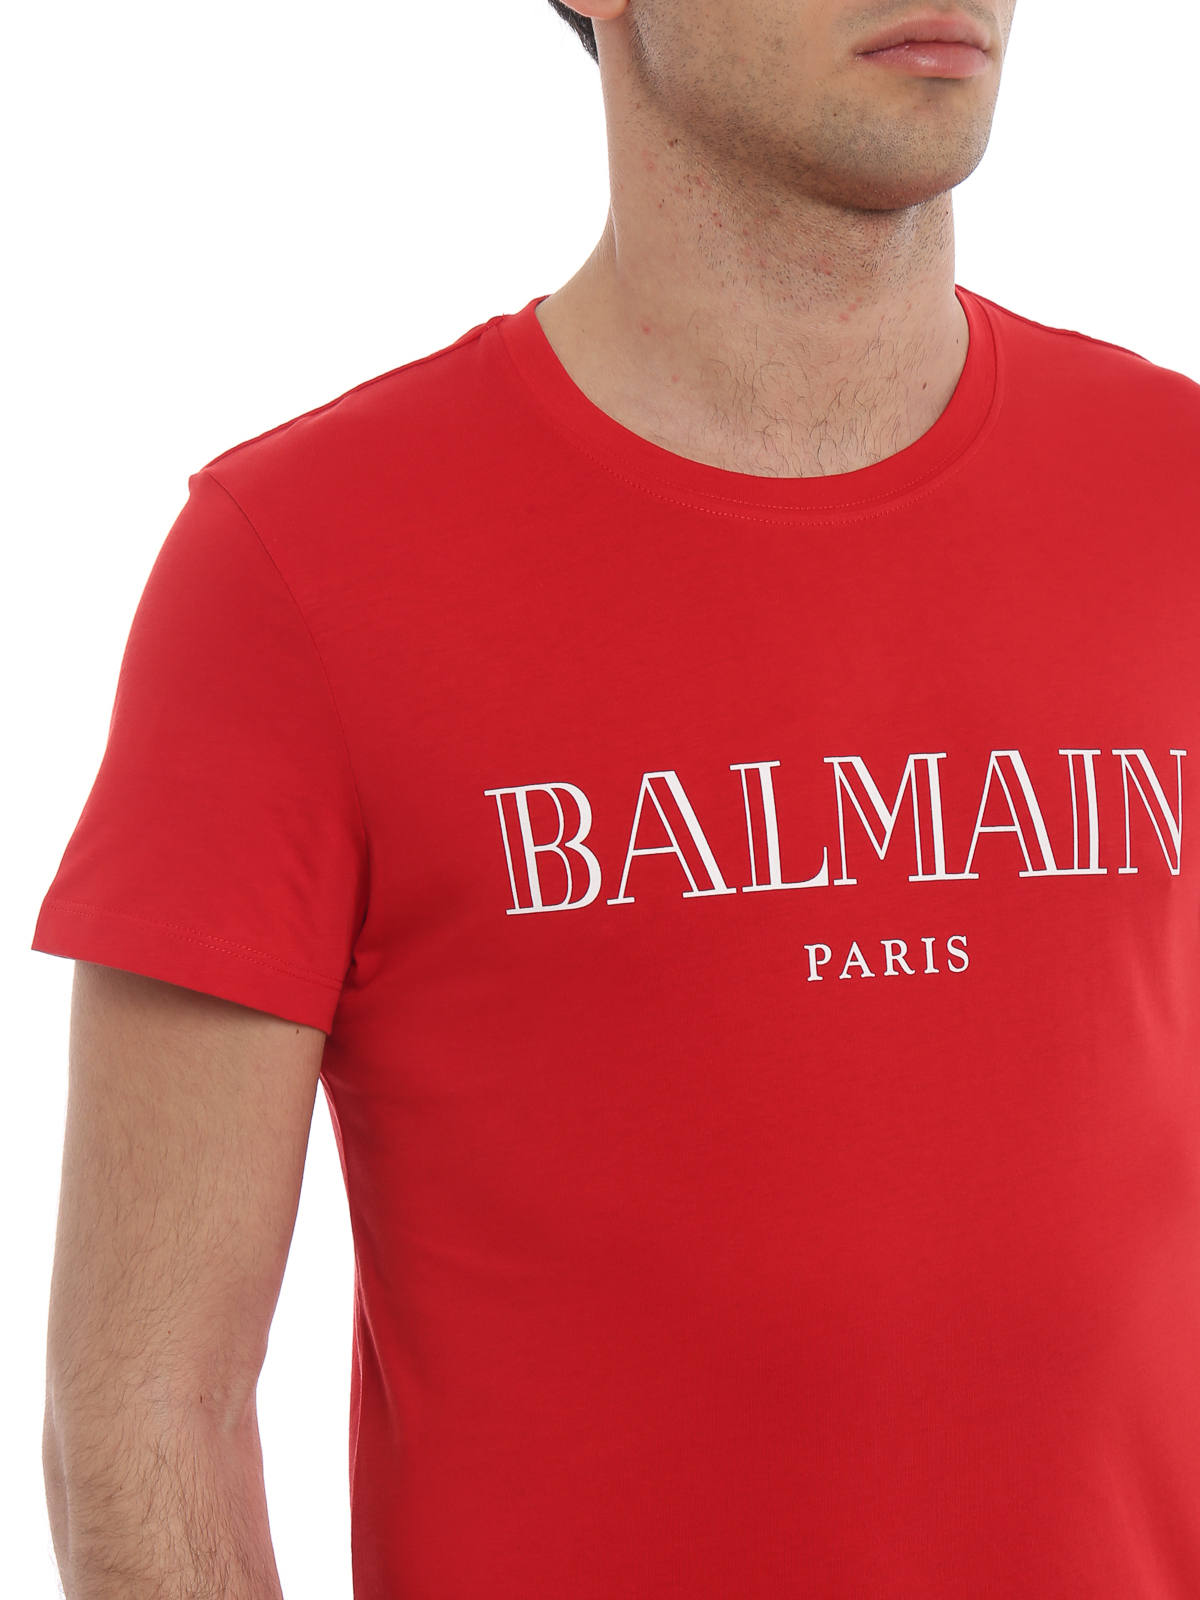 Fearless Såvel Ombord T-shirts Balmain - Balmain logo print red T-shirt - RH01601I1263AA